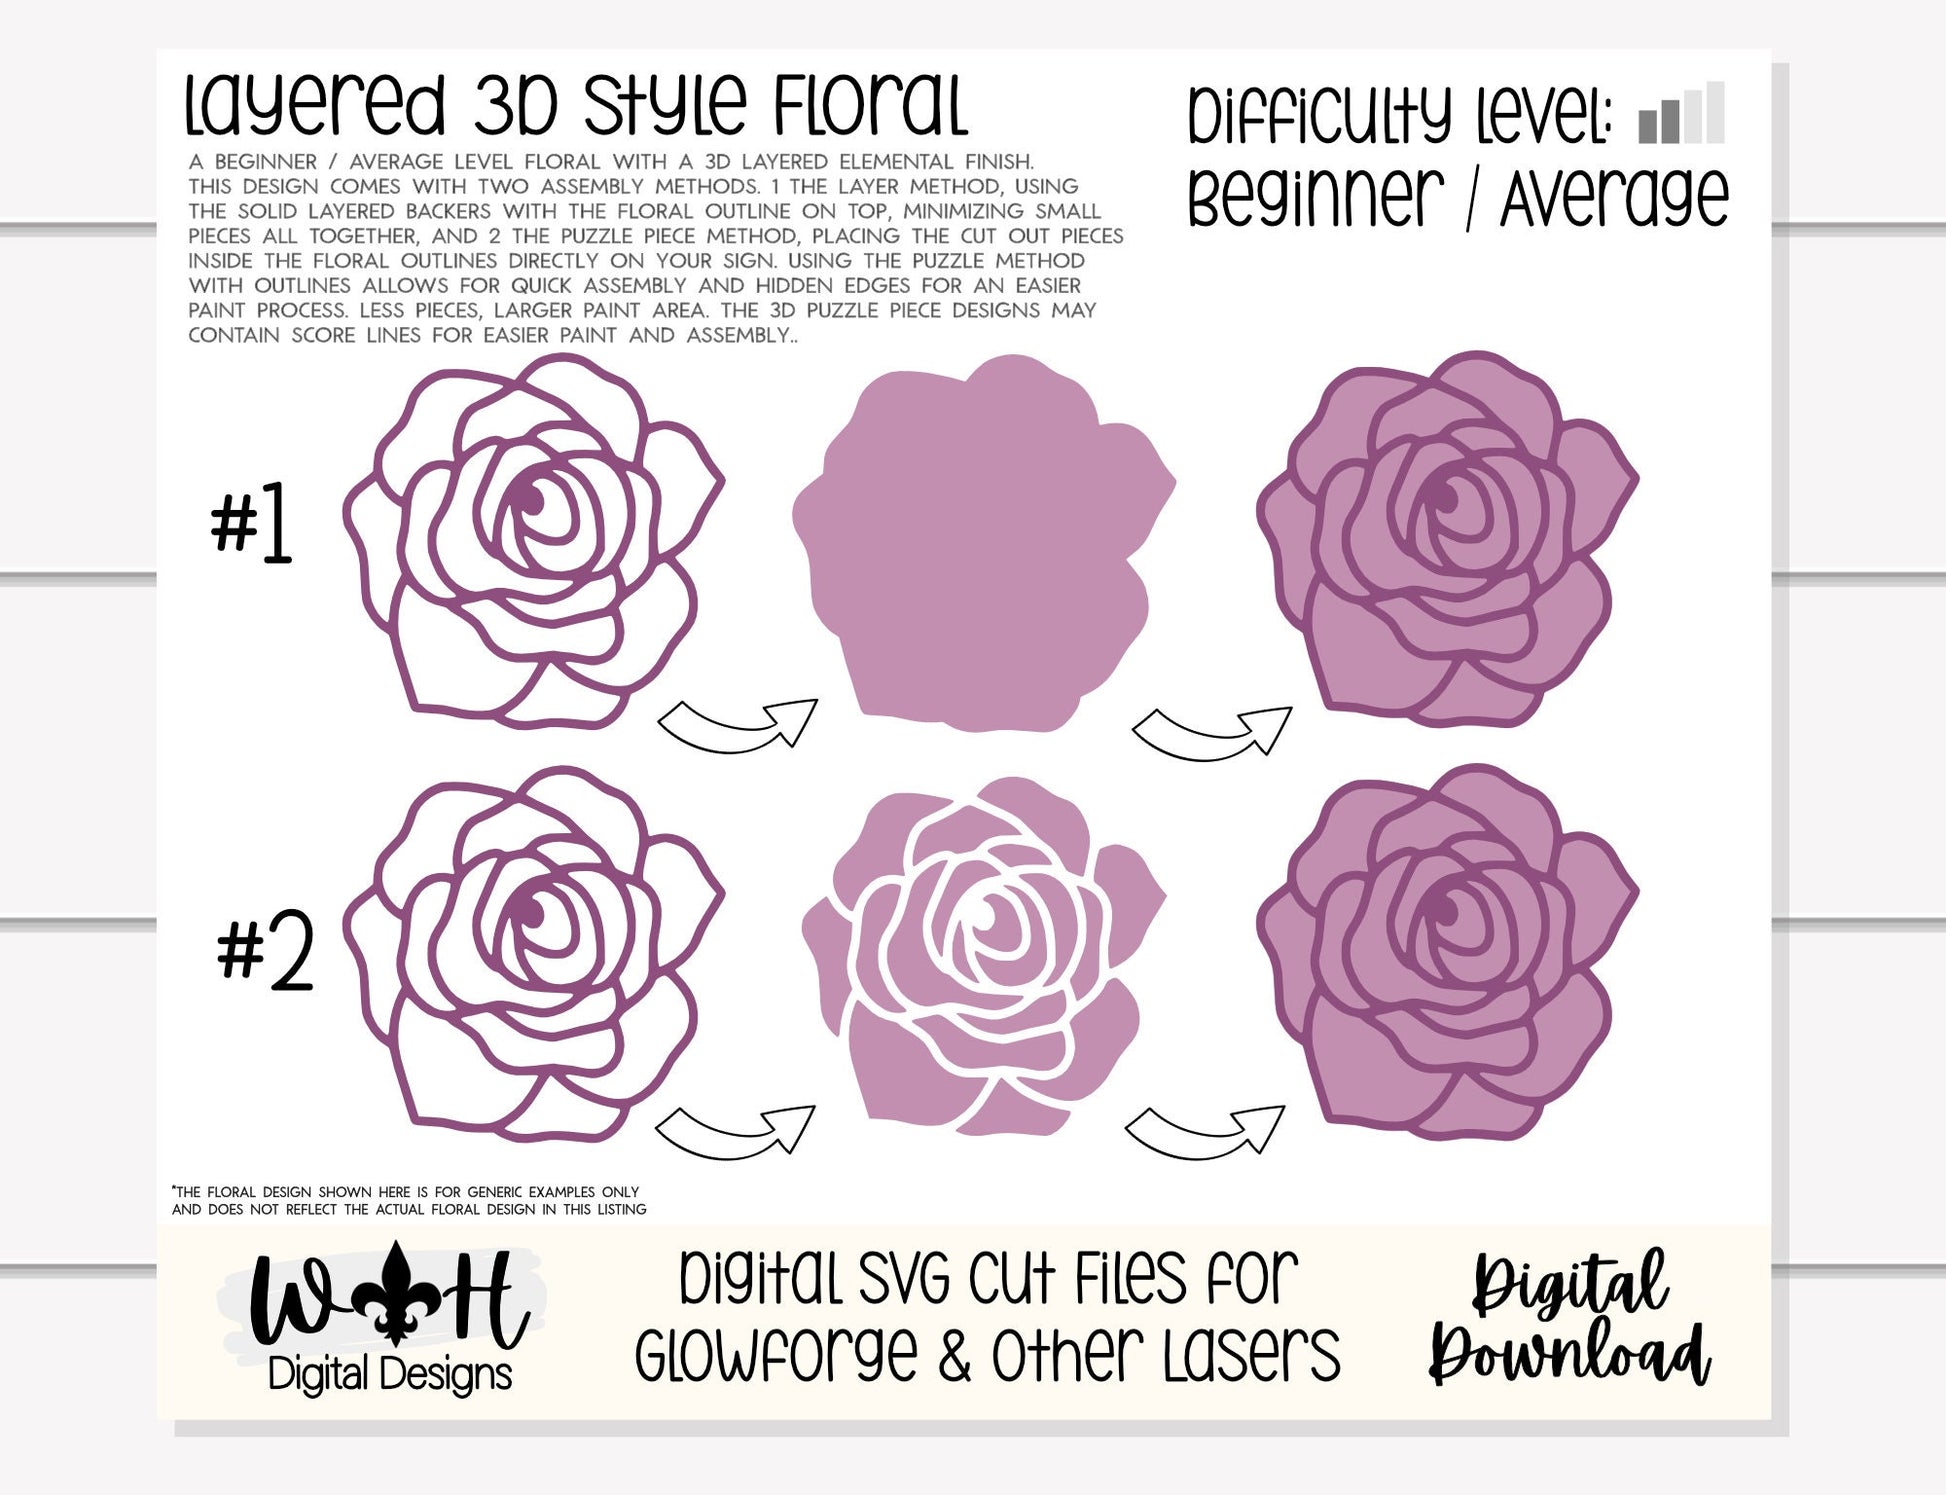 A Crown of Spring Flowers Round Door Hanger - Spring Floral Sign Making and DIY Kits - Cut File For Glowforge Laser - Digital SVG File